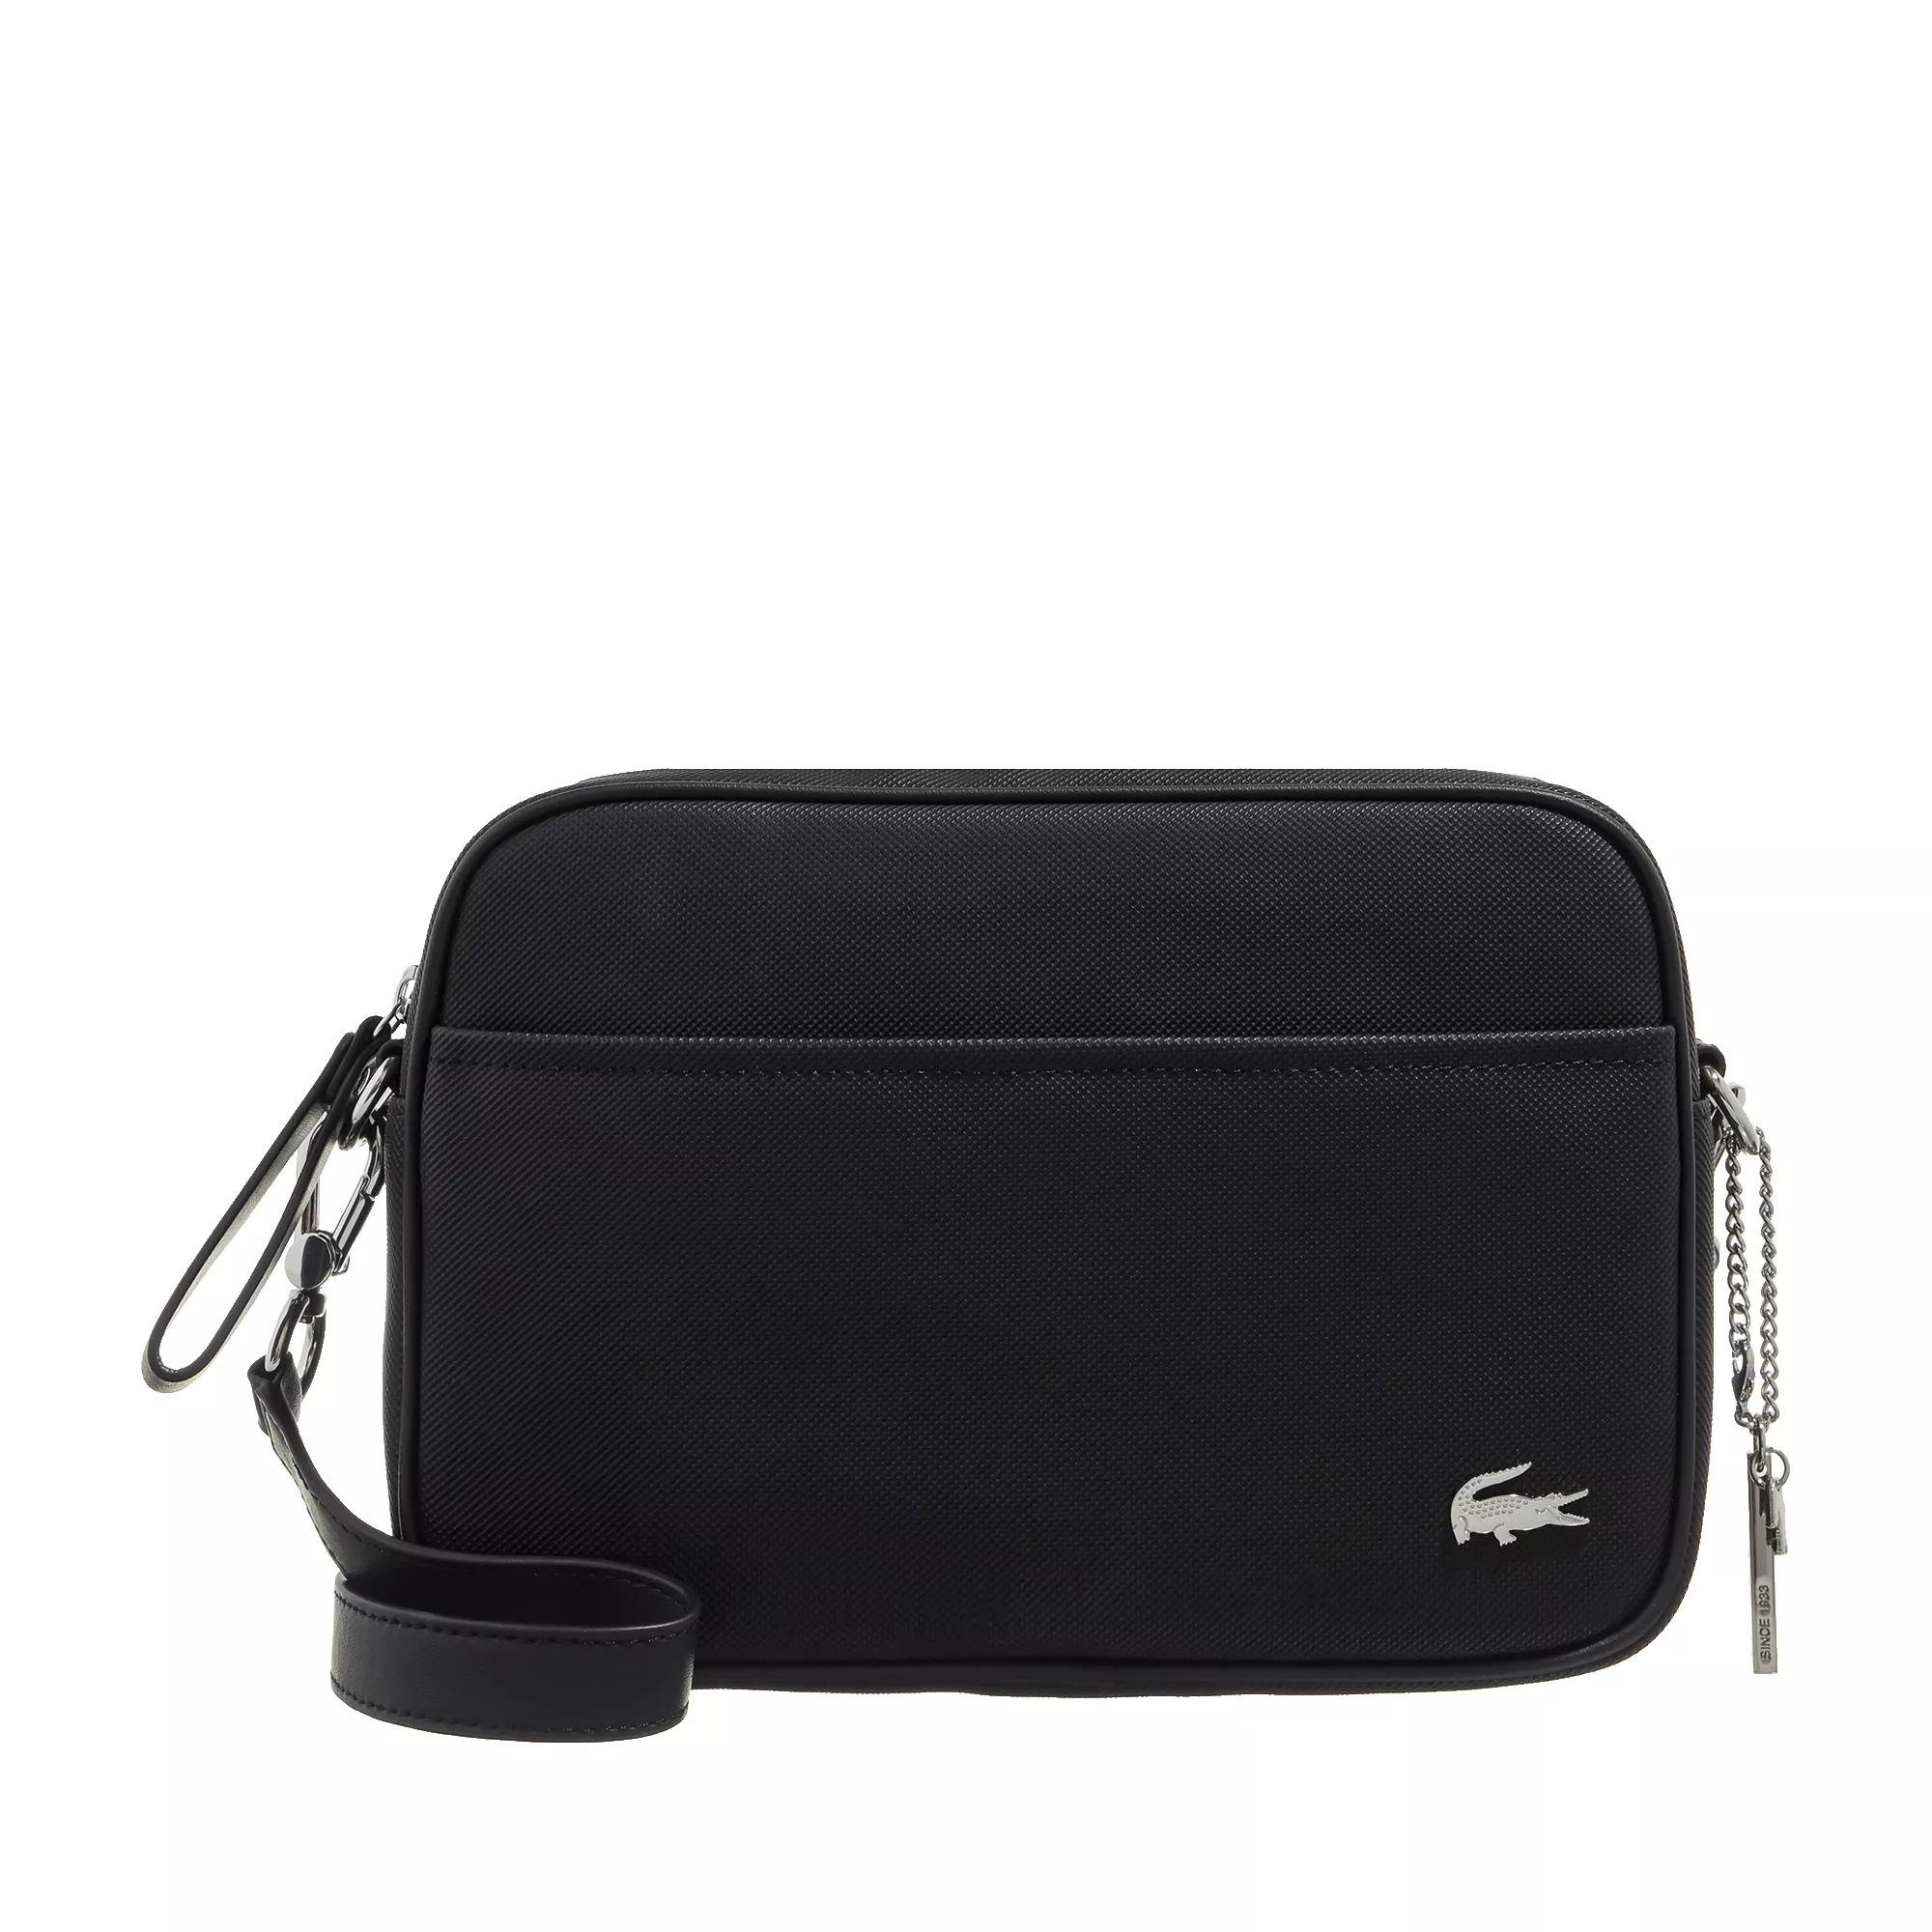 Lacoste Crossover Bag Noir | Crossbody Bag | fashionette